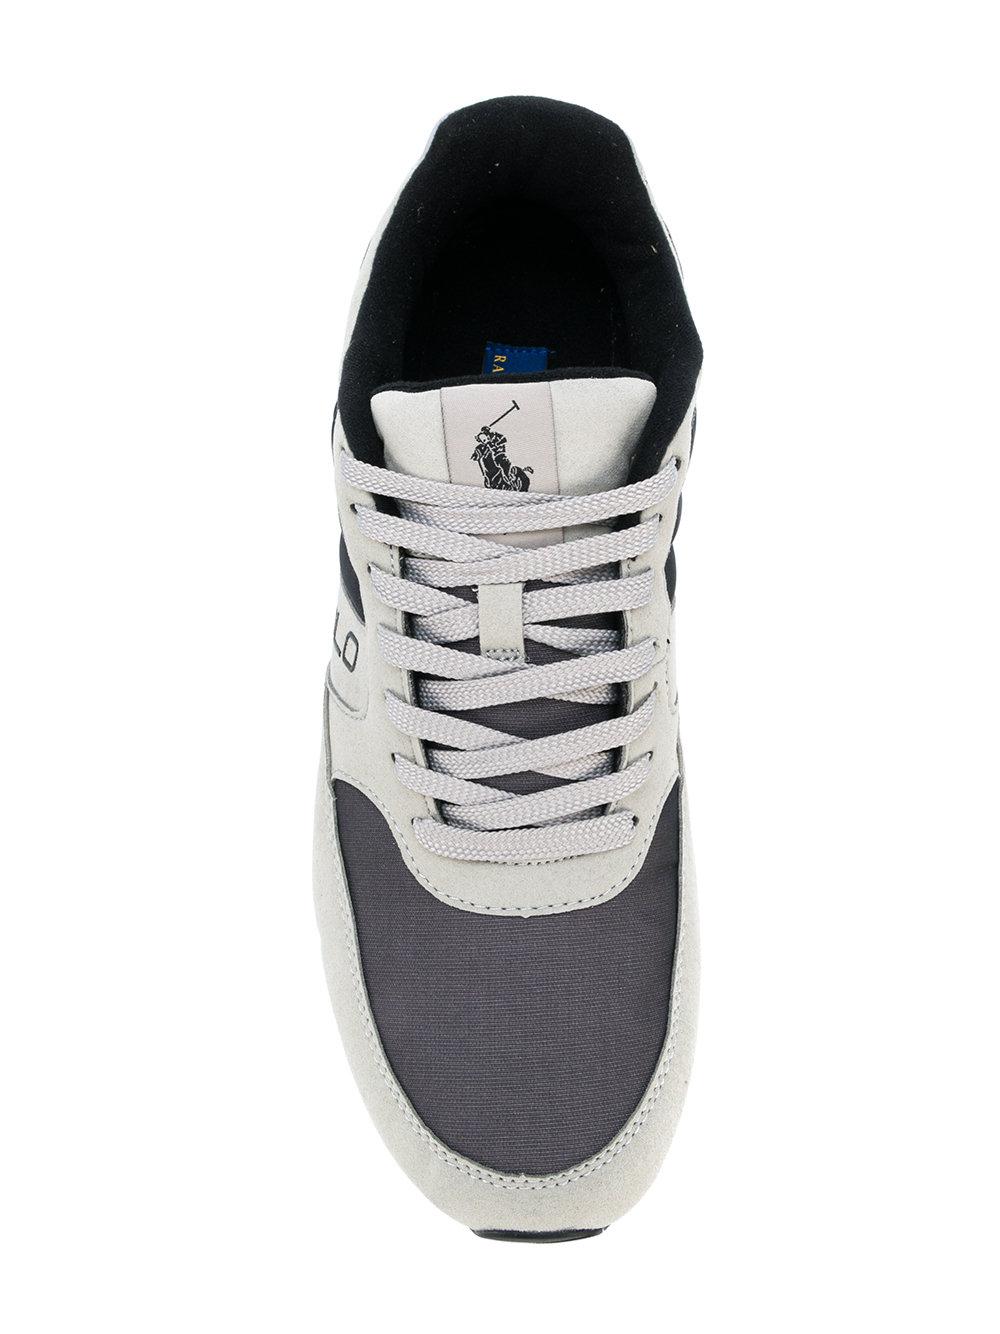 Polo Ralph Lauren Suede Laxman Tech Sneakers in Grey (Gray) for Men - Lyst